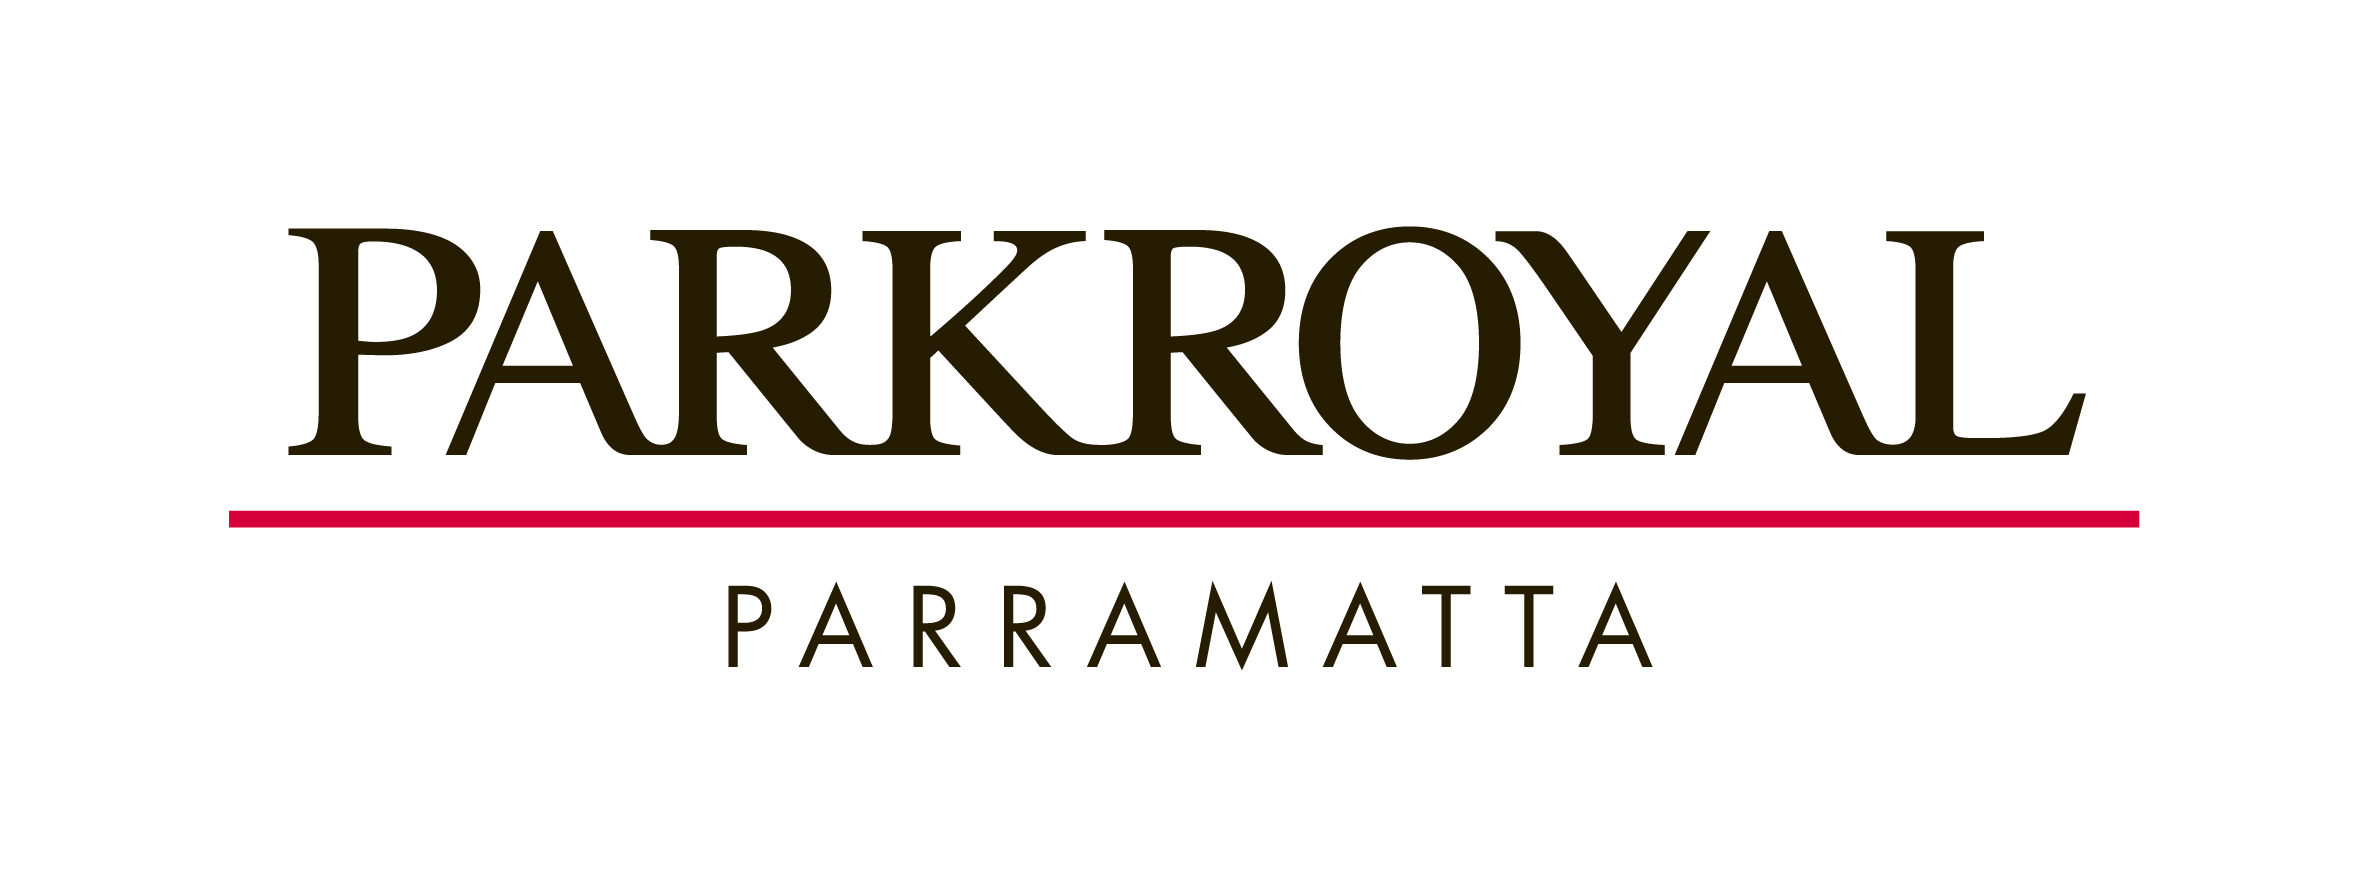 parkroyal parramatta logo